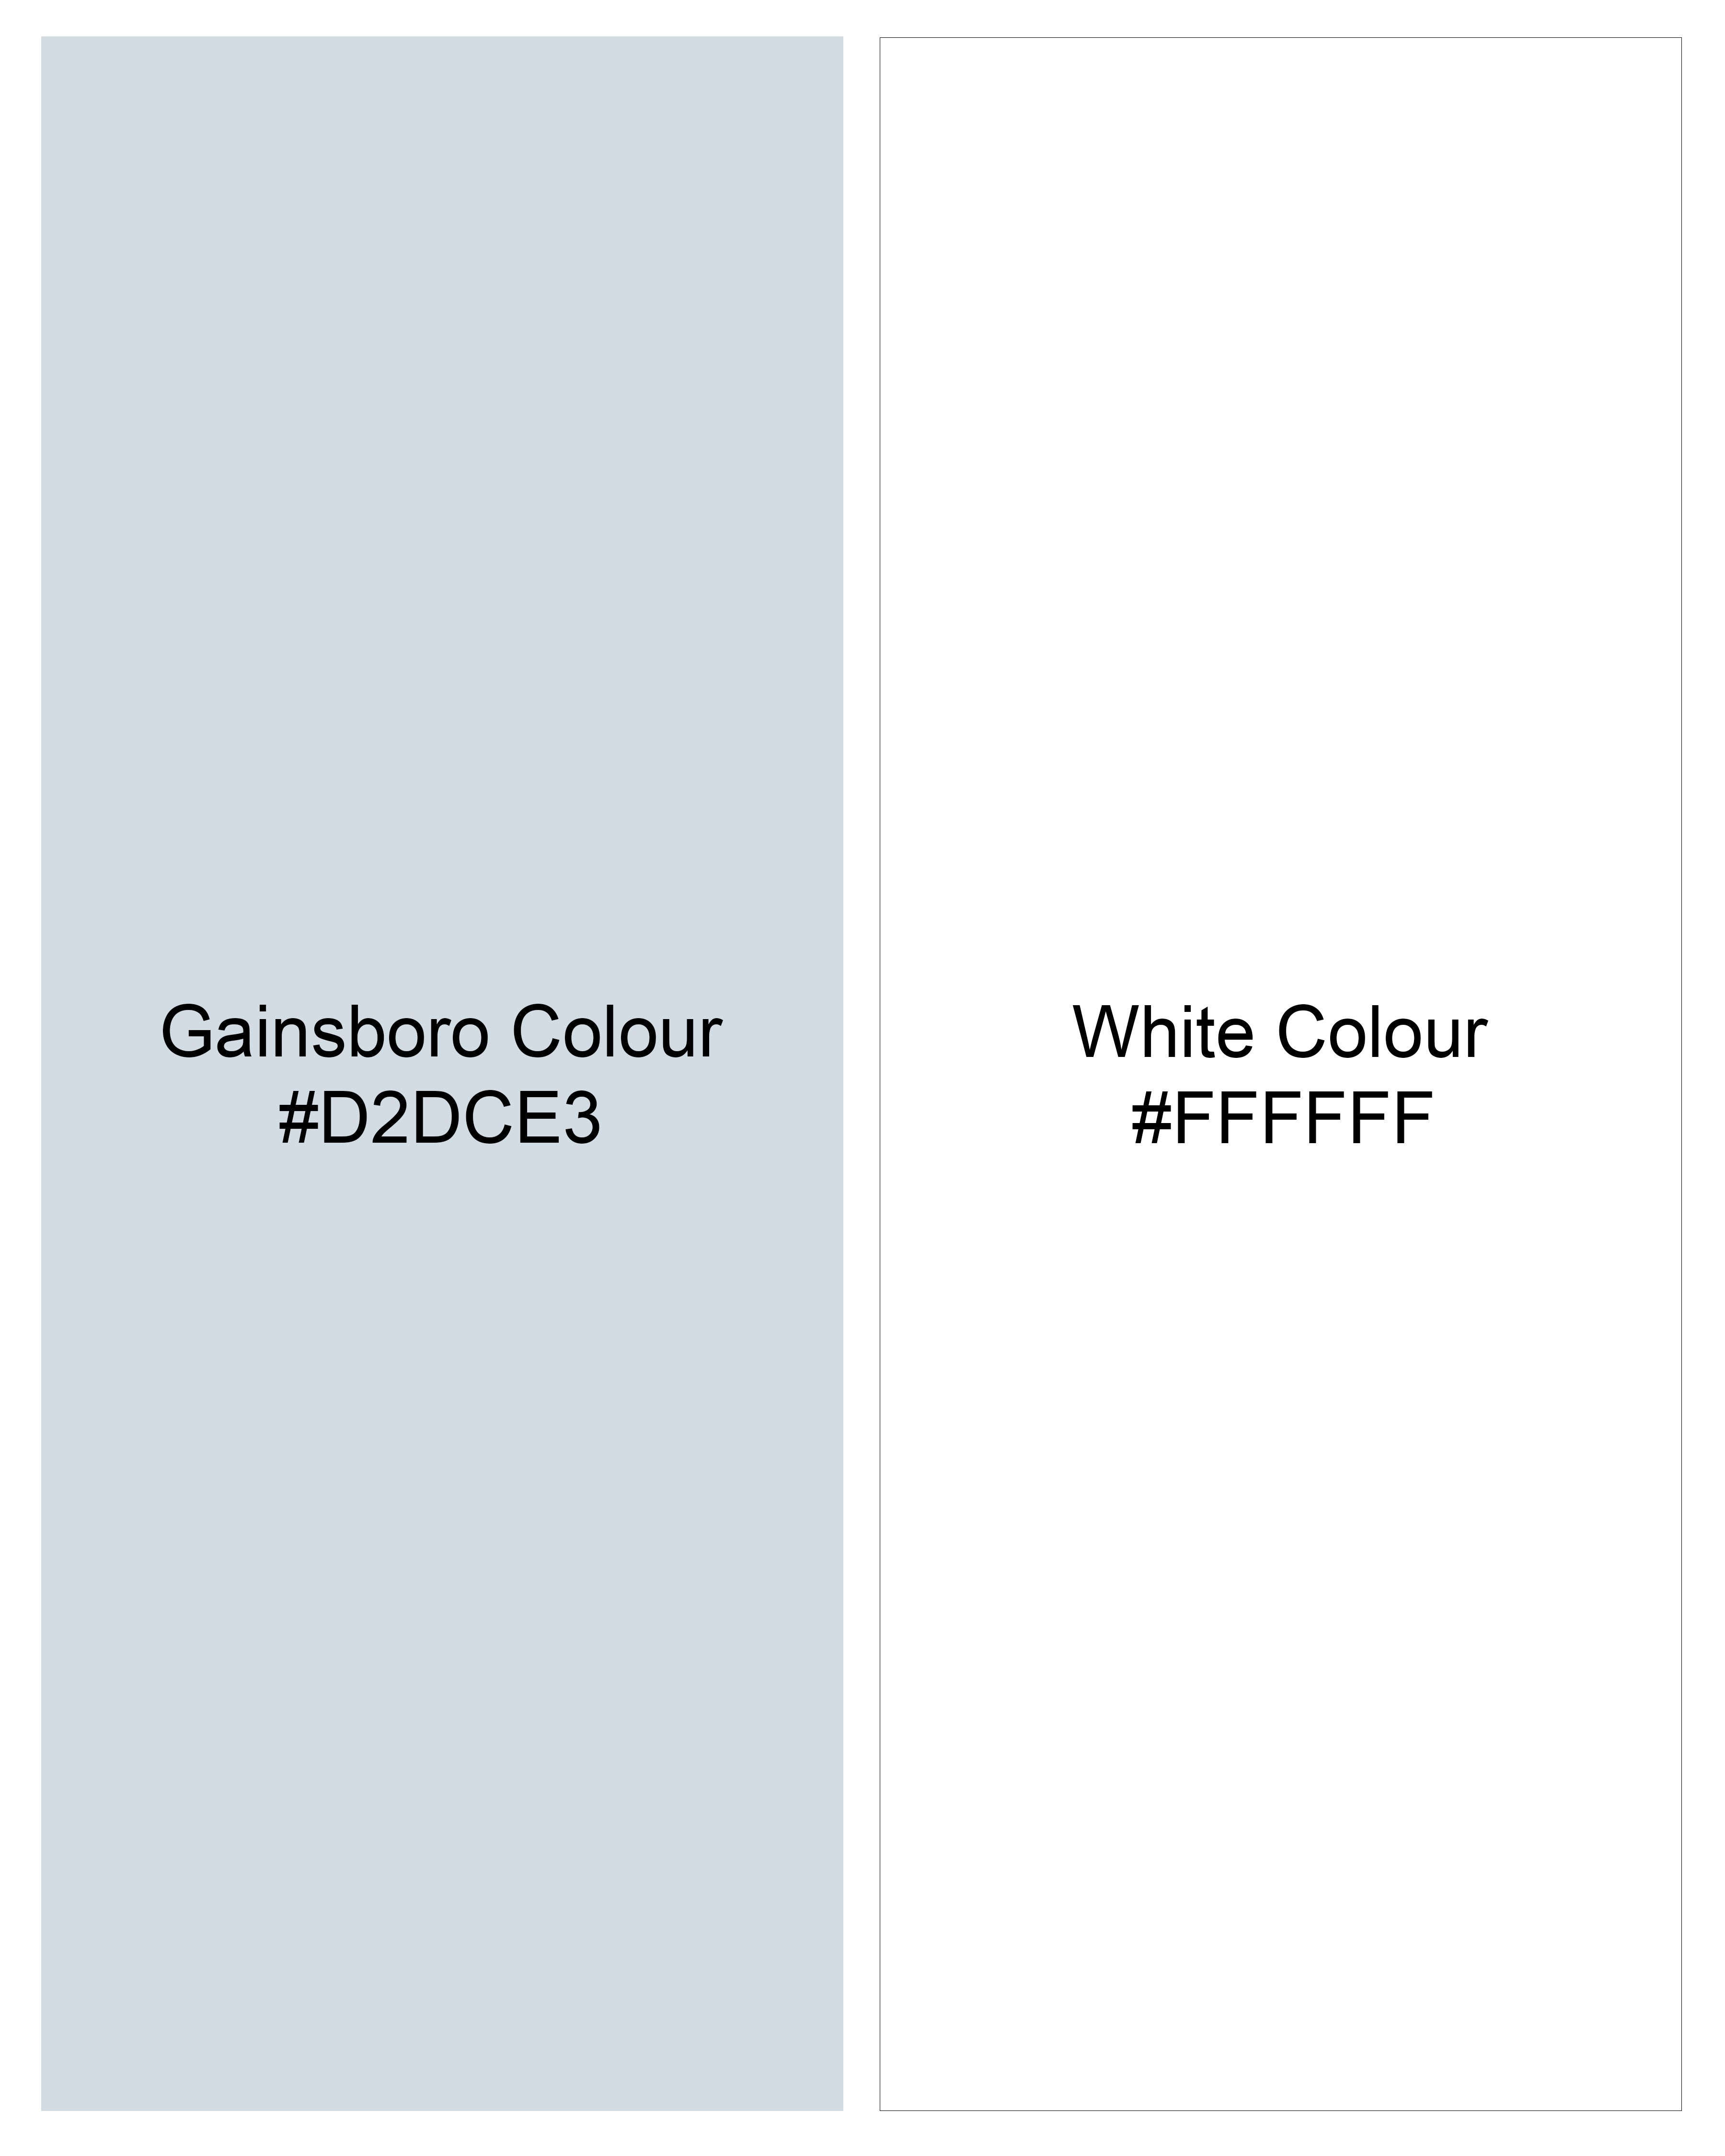 Gainsboro Gray and White Pin Striped Seersucker Premium Giza Cotton Shirt 9933-CA-38, 9933-CA-H-38, 9933-CA-39, 9933-CA-H-39, 9933-CA-40, 9933-CA-H-40, 9933-CA-42, 9933-CA-H-42, 9933-CA-44, 9933-CA-H-44, 9933-CA-46, 9933-CA-H-46, 9933-CA-48, 9933-CA-H-48, 9933-CA-50, 9933-CA-H-50, 9933-CA-52, 9933-CA-H-52